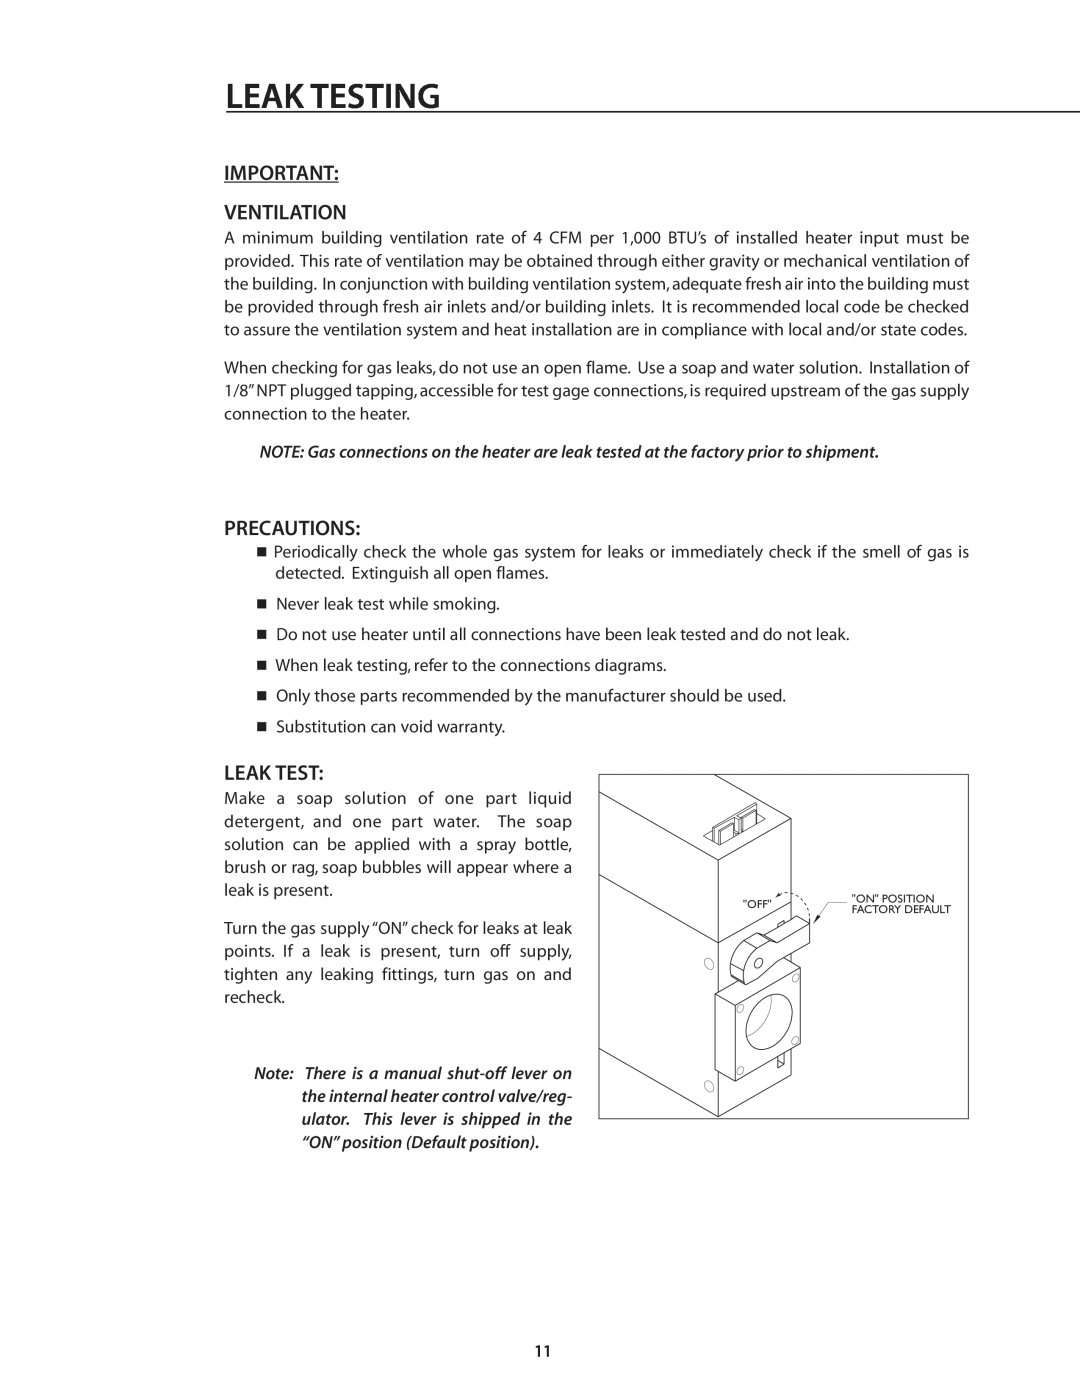 DCS DRH48N installation instructions Leak Testing, Ventilation, Precautions 